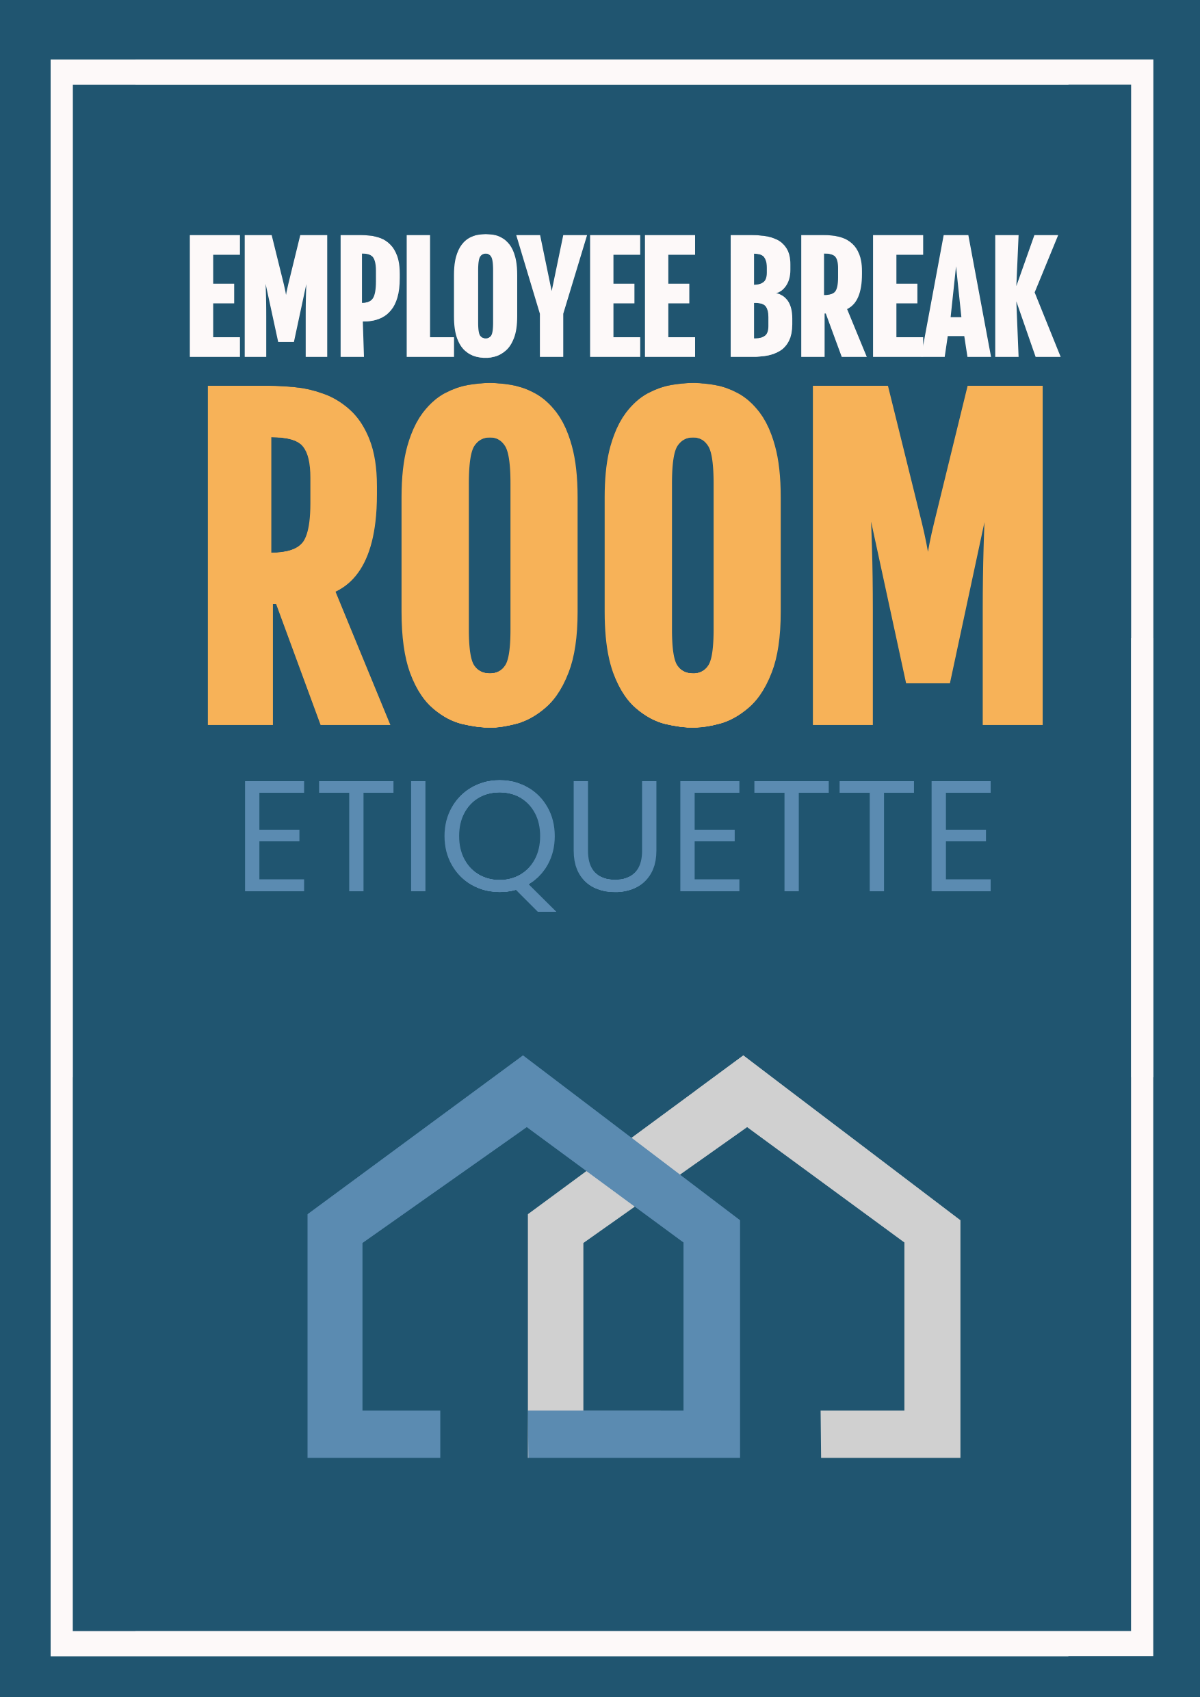 Employee Break Room Etiquette Signage Template